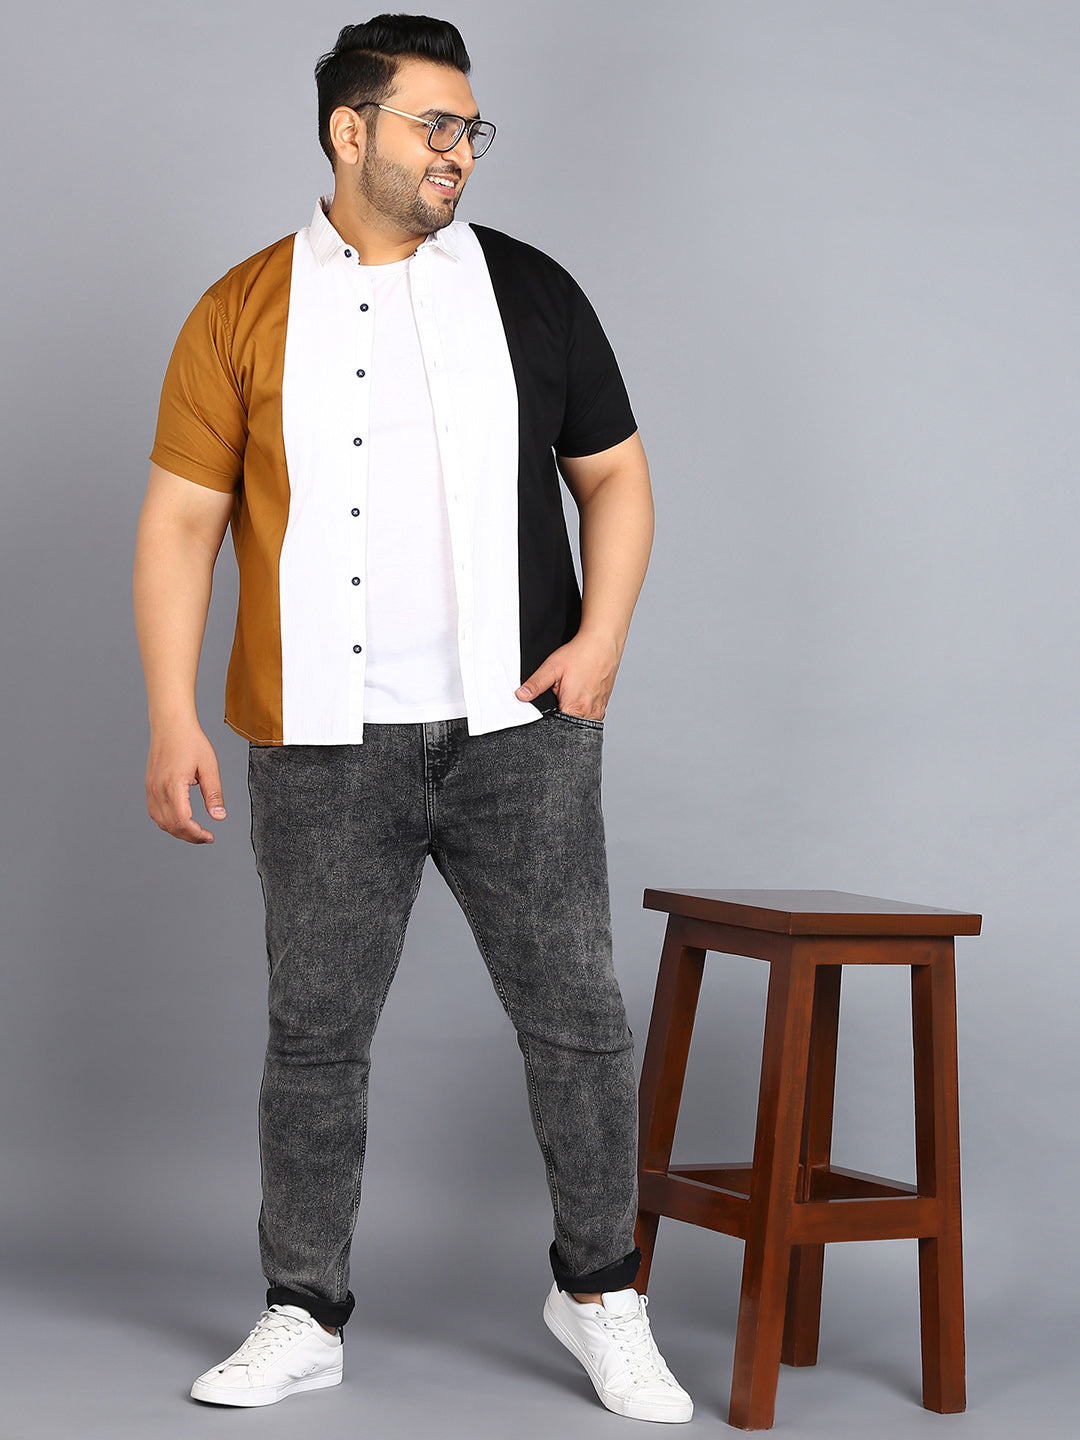 Plus Men's Beige, Off White, Black Cotton Half Sleeve Regular Fit Casual Colorblock Shirt